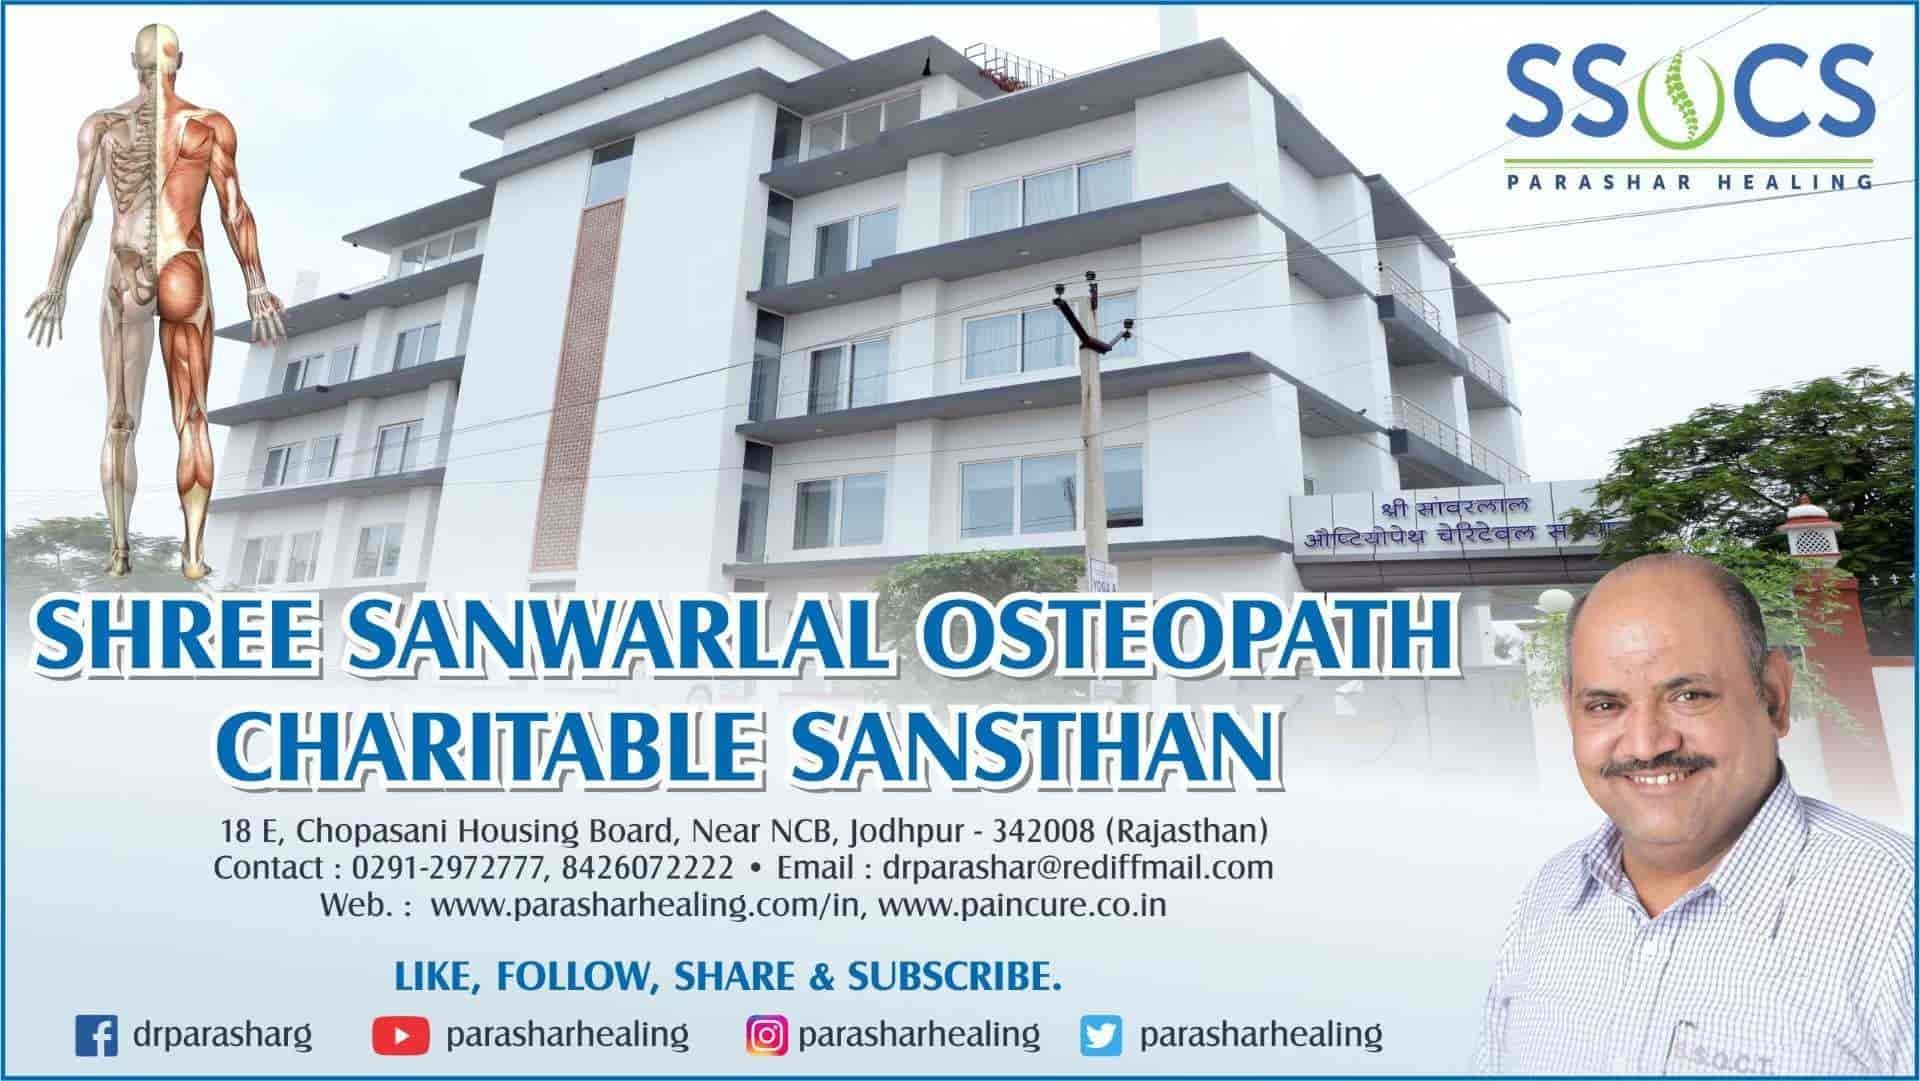 Shree Sanwarlal Osteopath Charitable Sansthan